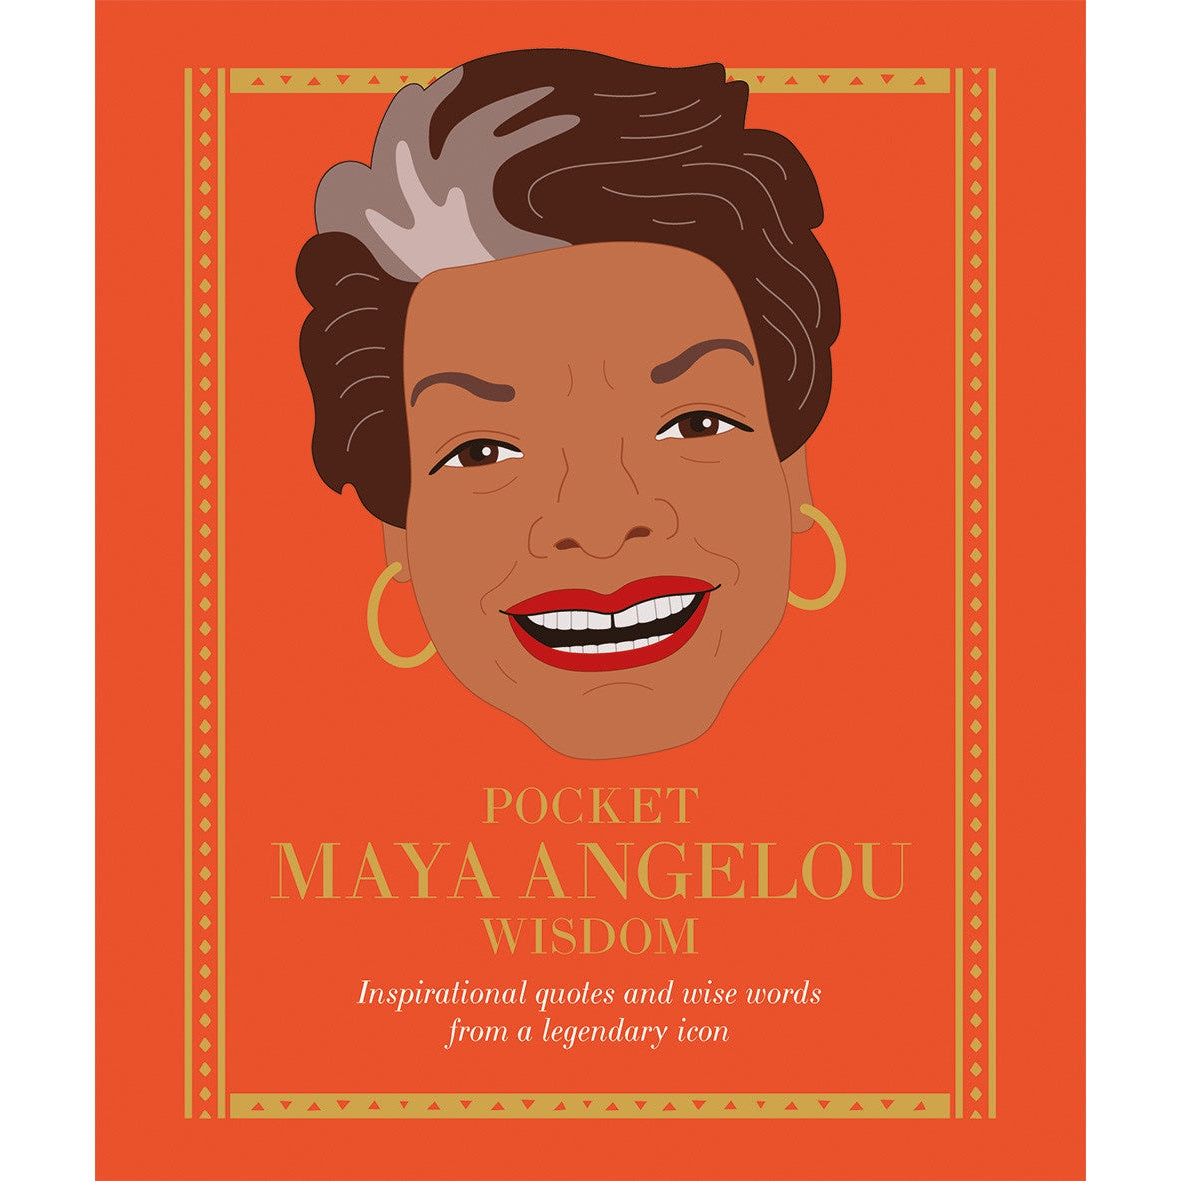 Pocket Maya Angelou Wisdom book